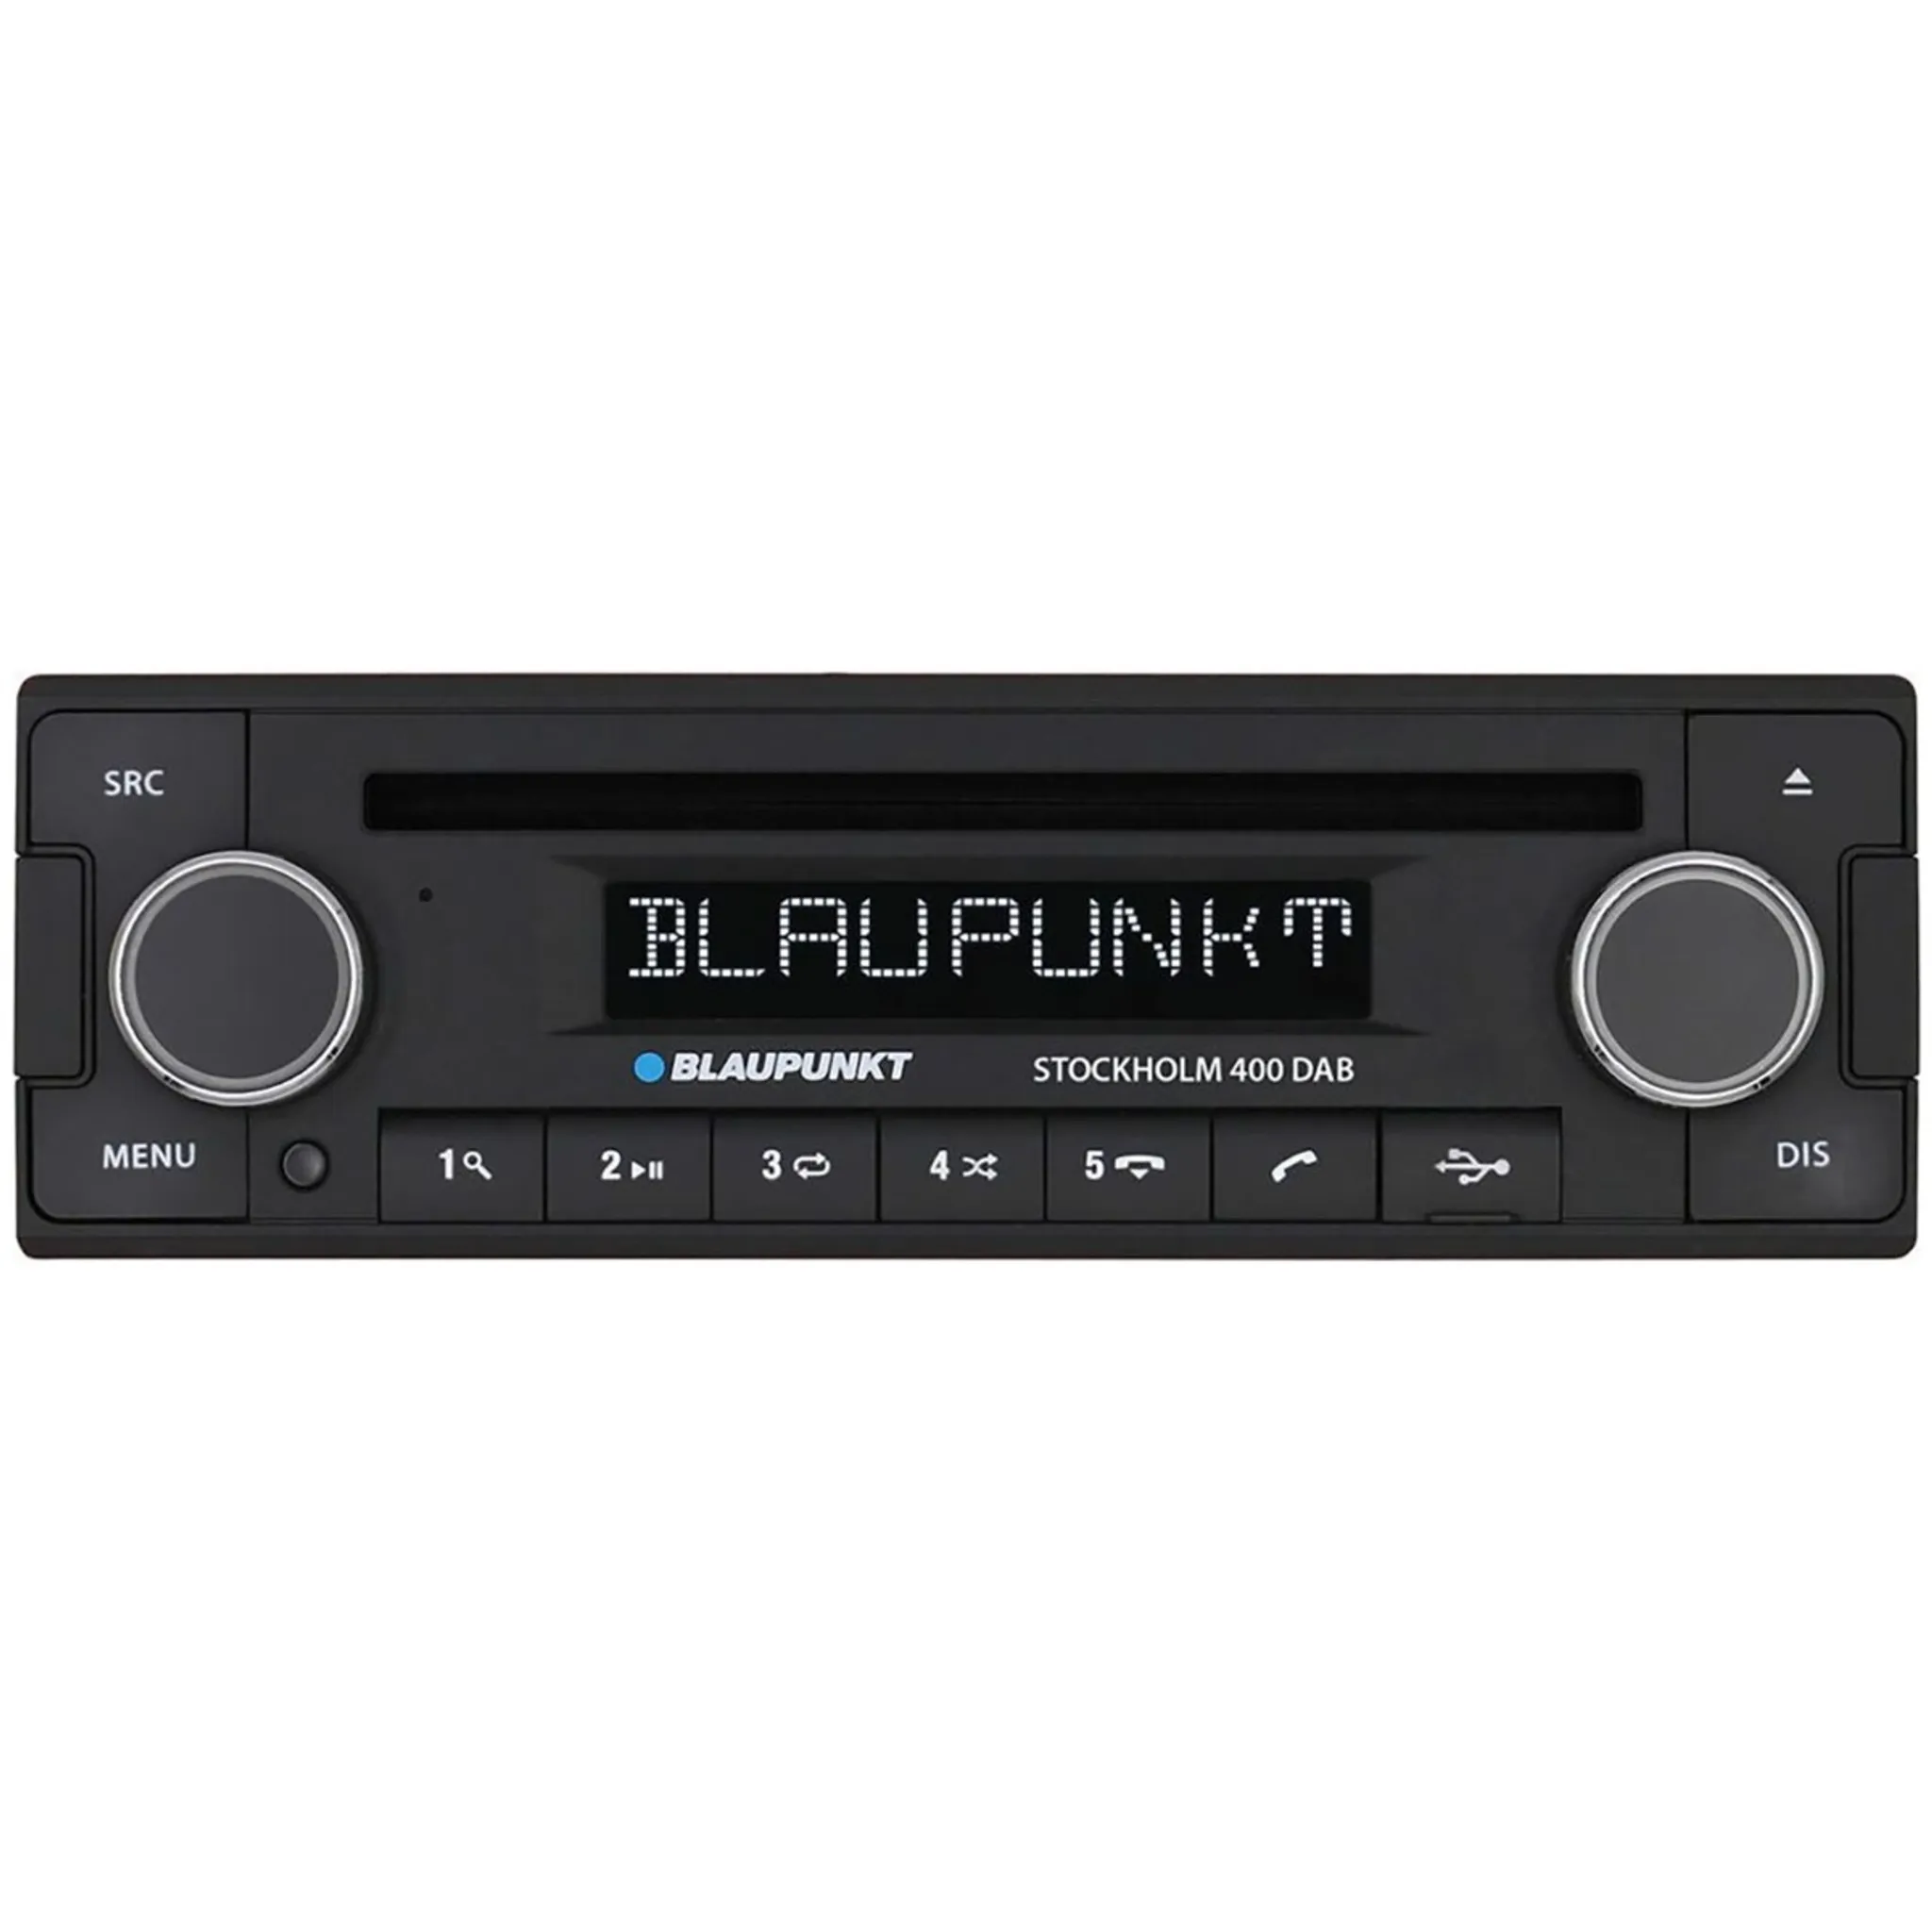 JVC KW-DB95BT 2-DIN CD MP3 DAB+ Autoradio USB Bluetooth Digitalradio